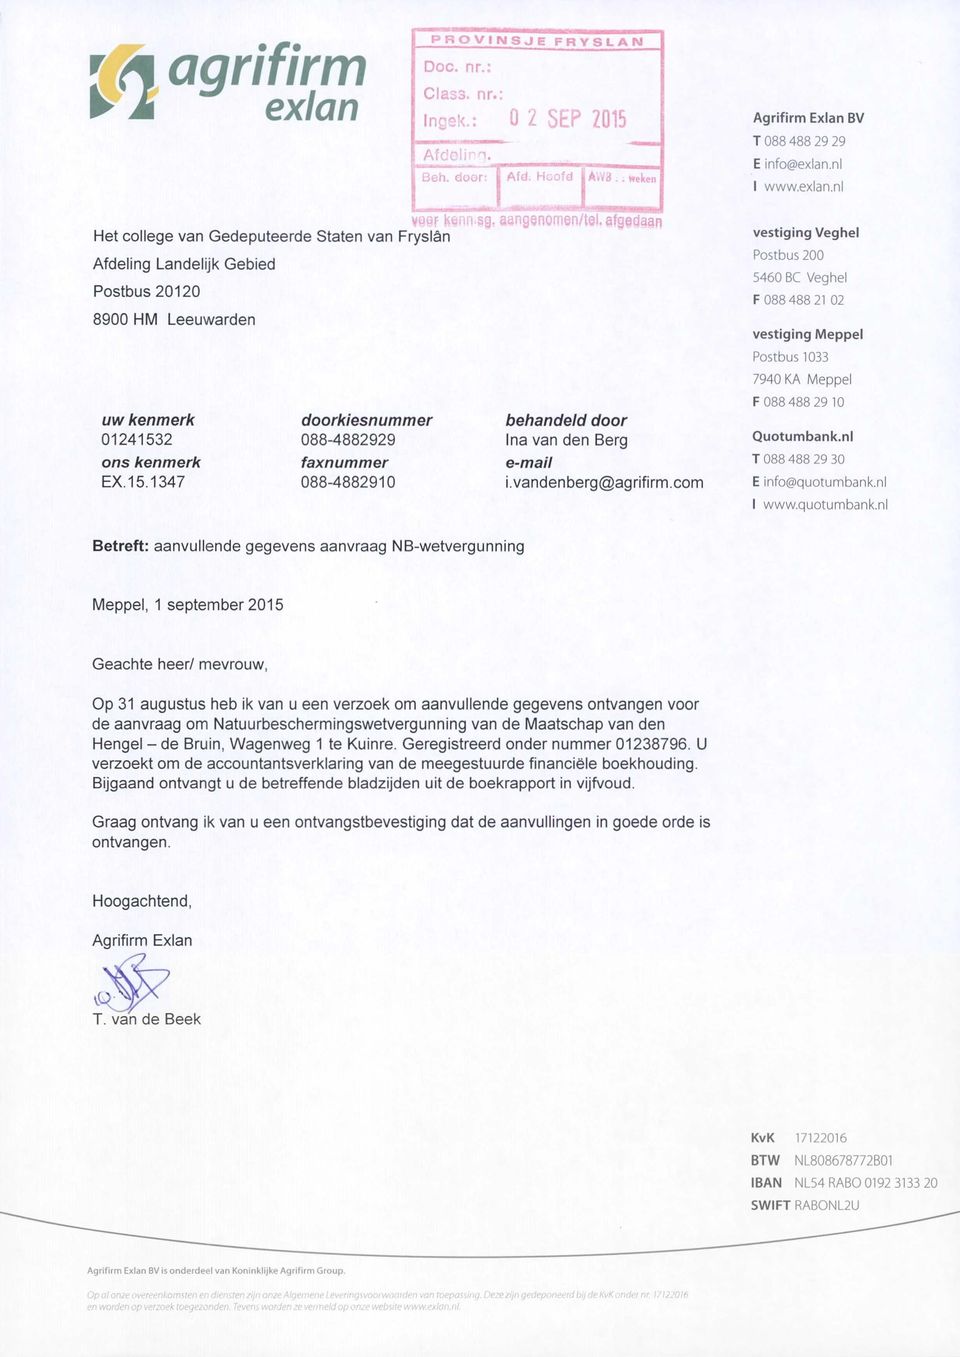 147 doorkiesnummer 088-4882929 faxnummer 088-4882910 behandeld door Ina van den Berg e-mall i.vandenberg@agrifirnn.